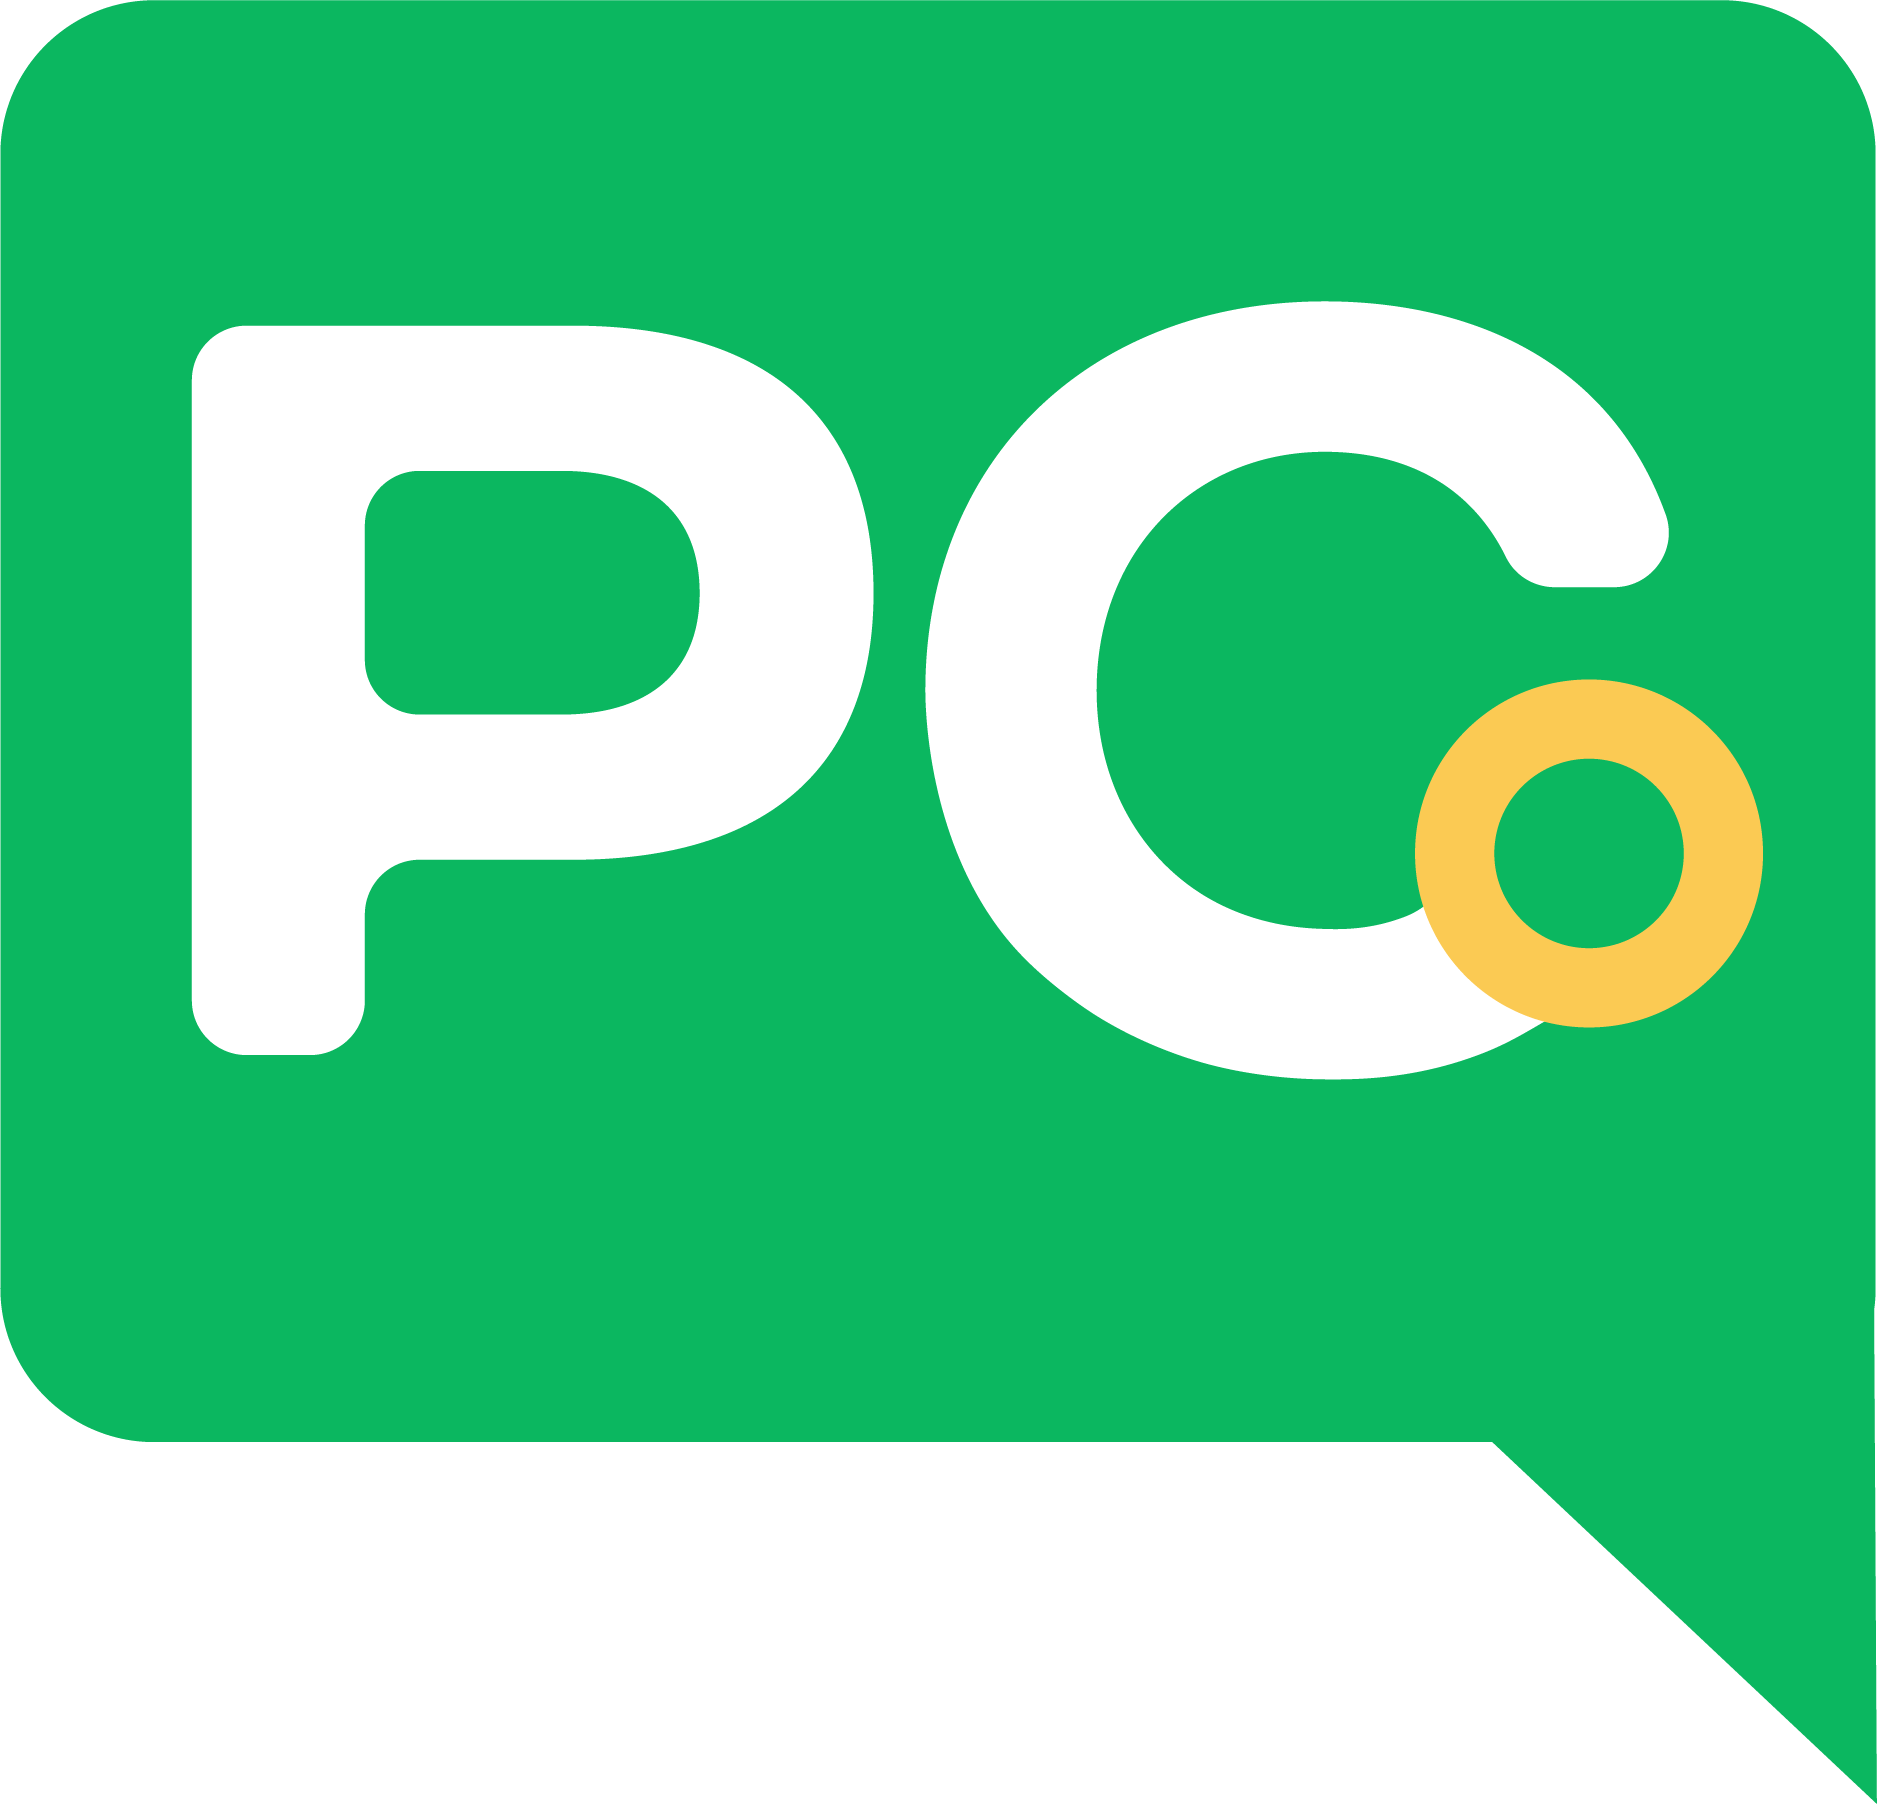 PCB CUPID - PCB Cupid logo Design logo PNG 300722 V1 1 - Mission